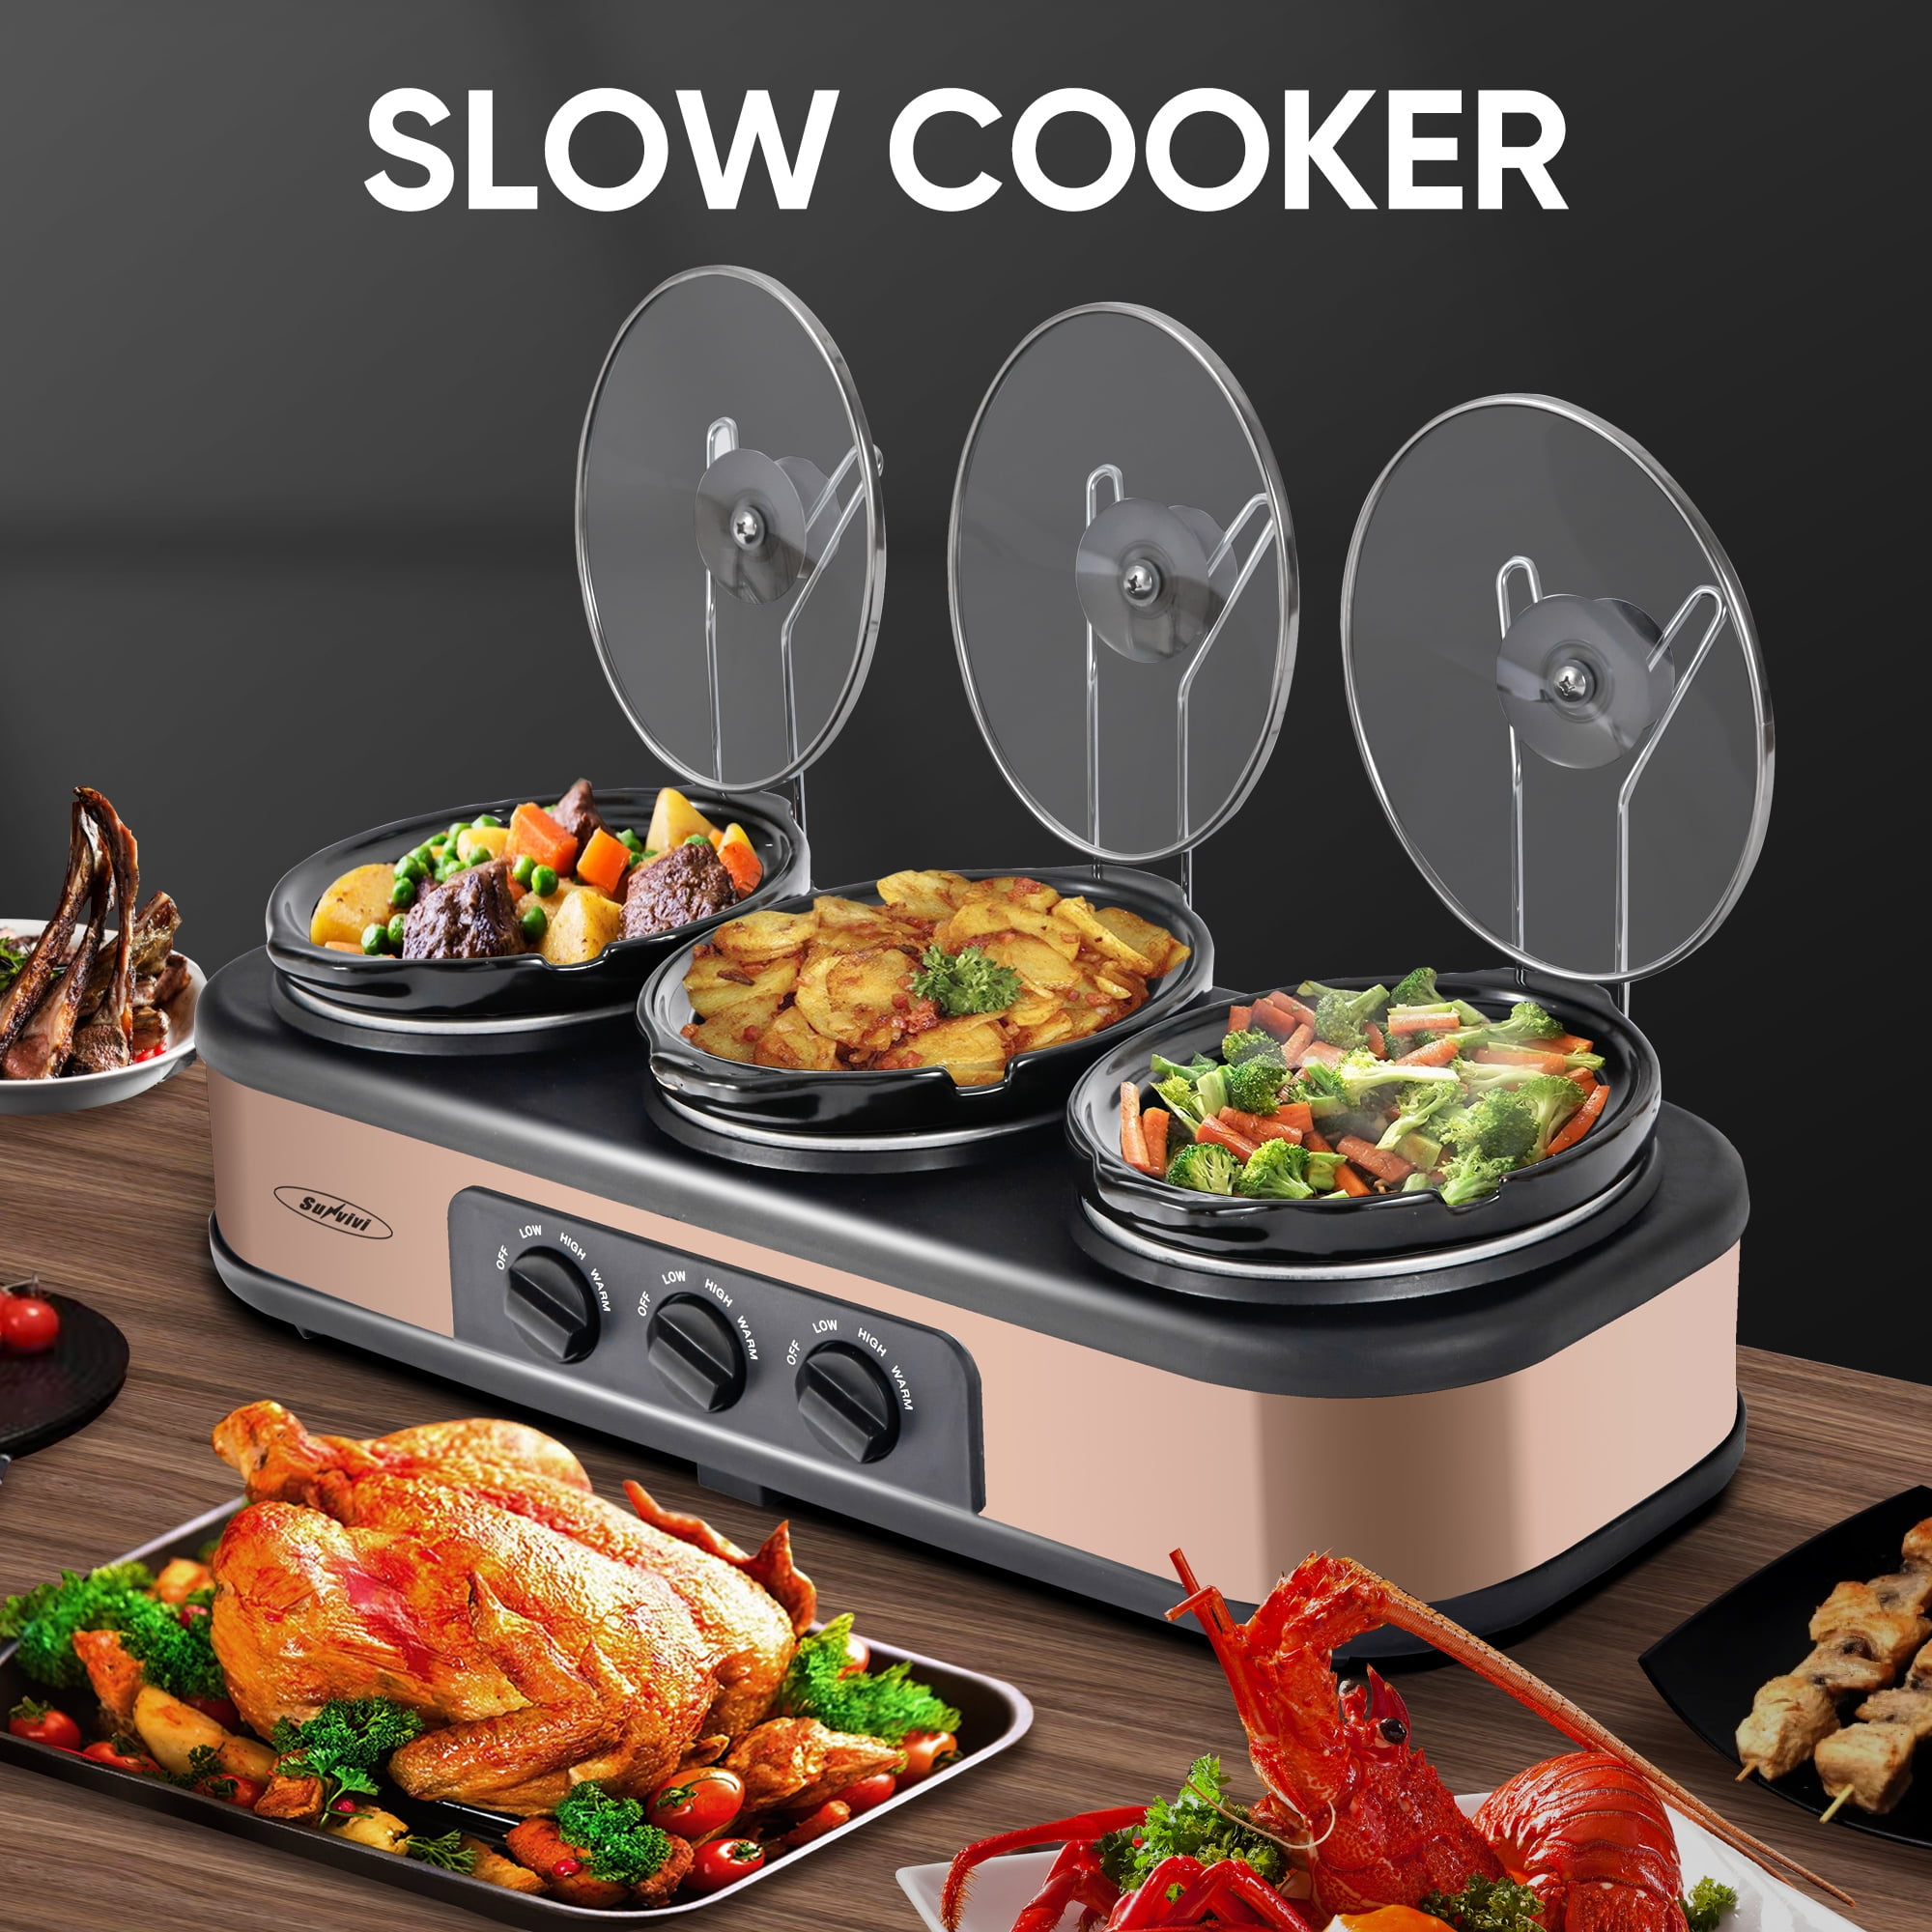 Sunvivi Small Double Slow Cooker, 2 Pot 1.25 Quart Oval Crock Food Warmer Buffet Server, Stainless Steel, Size: 2 x 1.25 qt, Black